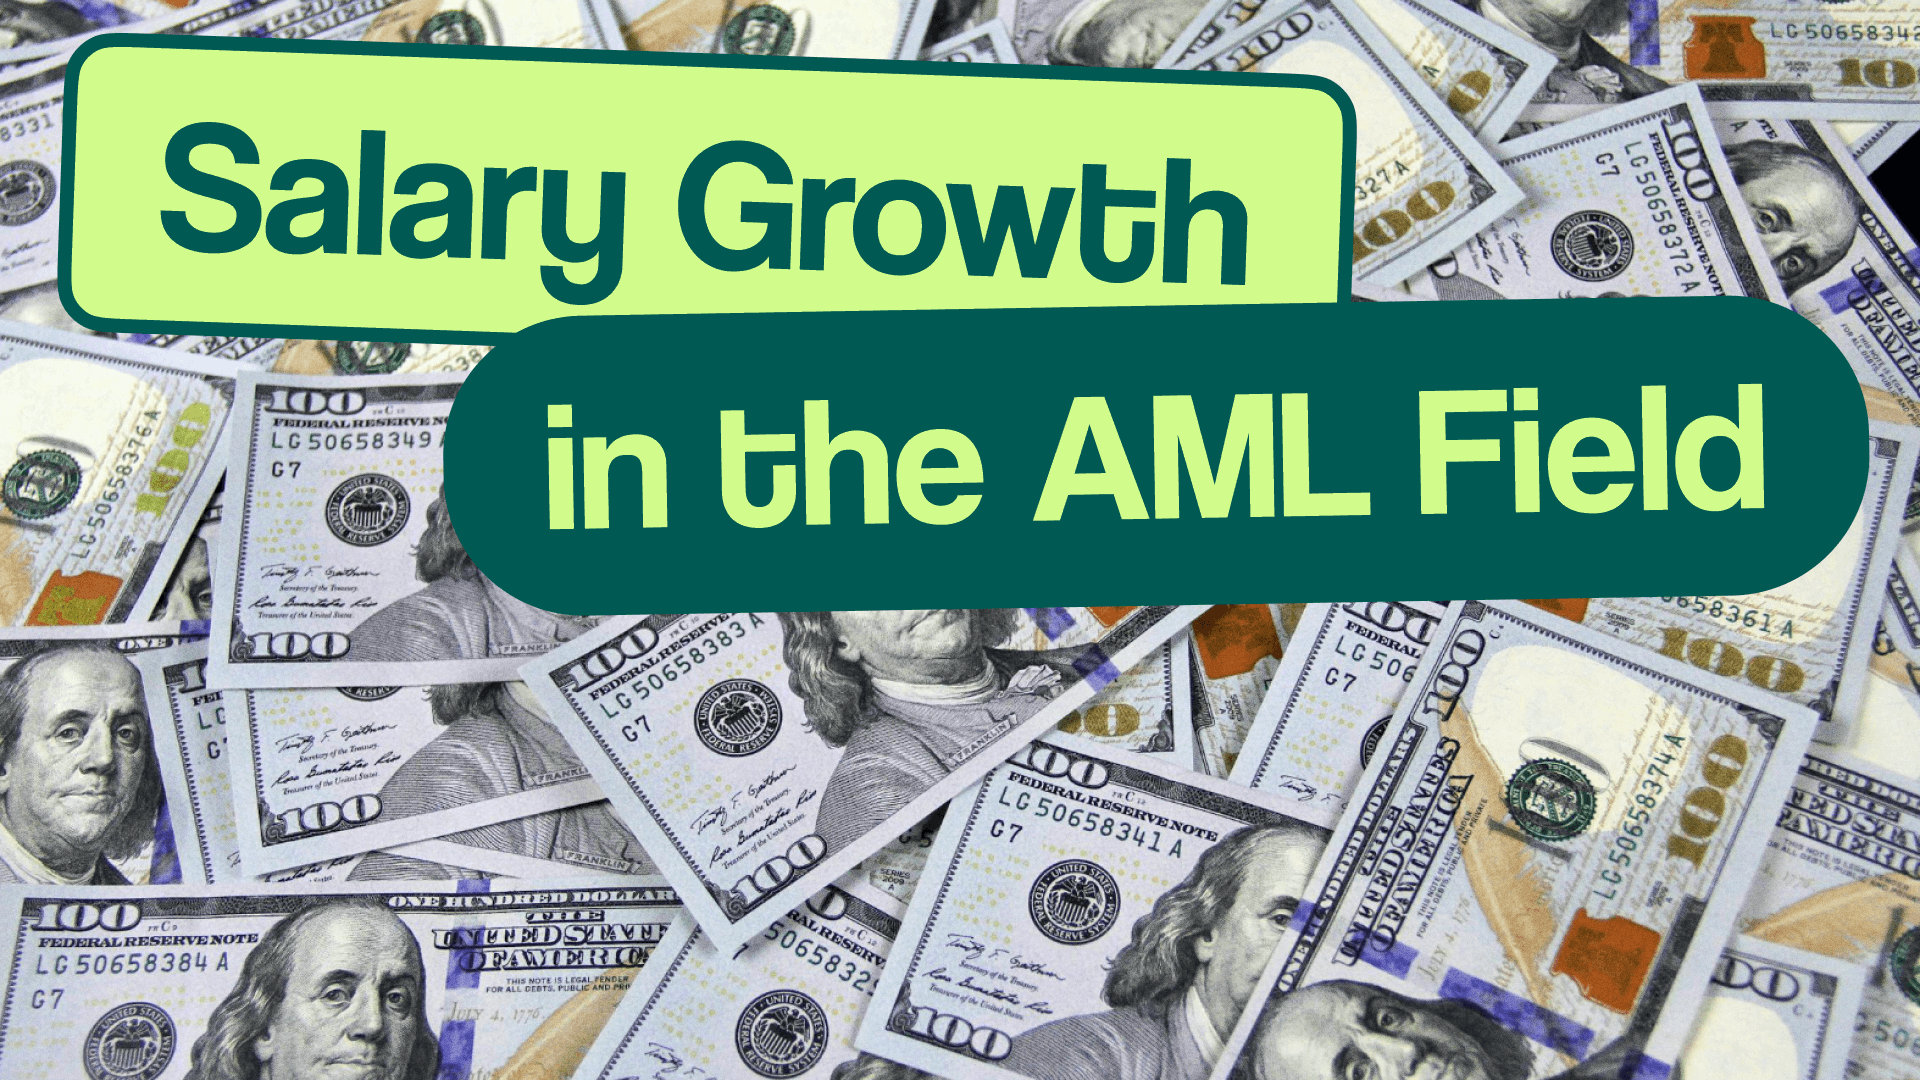 Salary Growth in AML